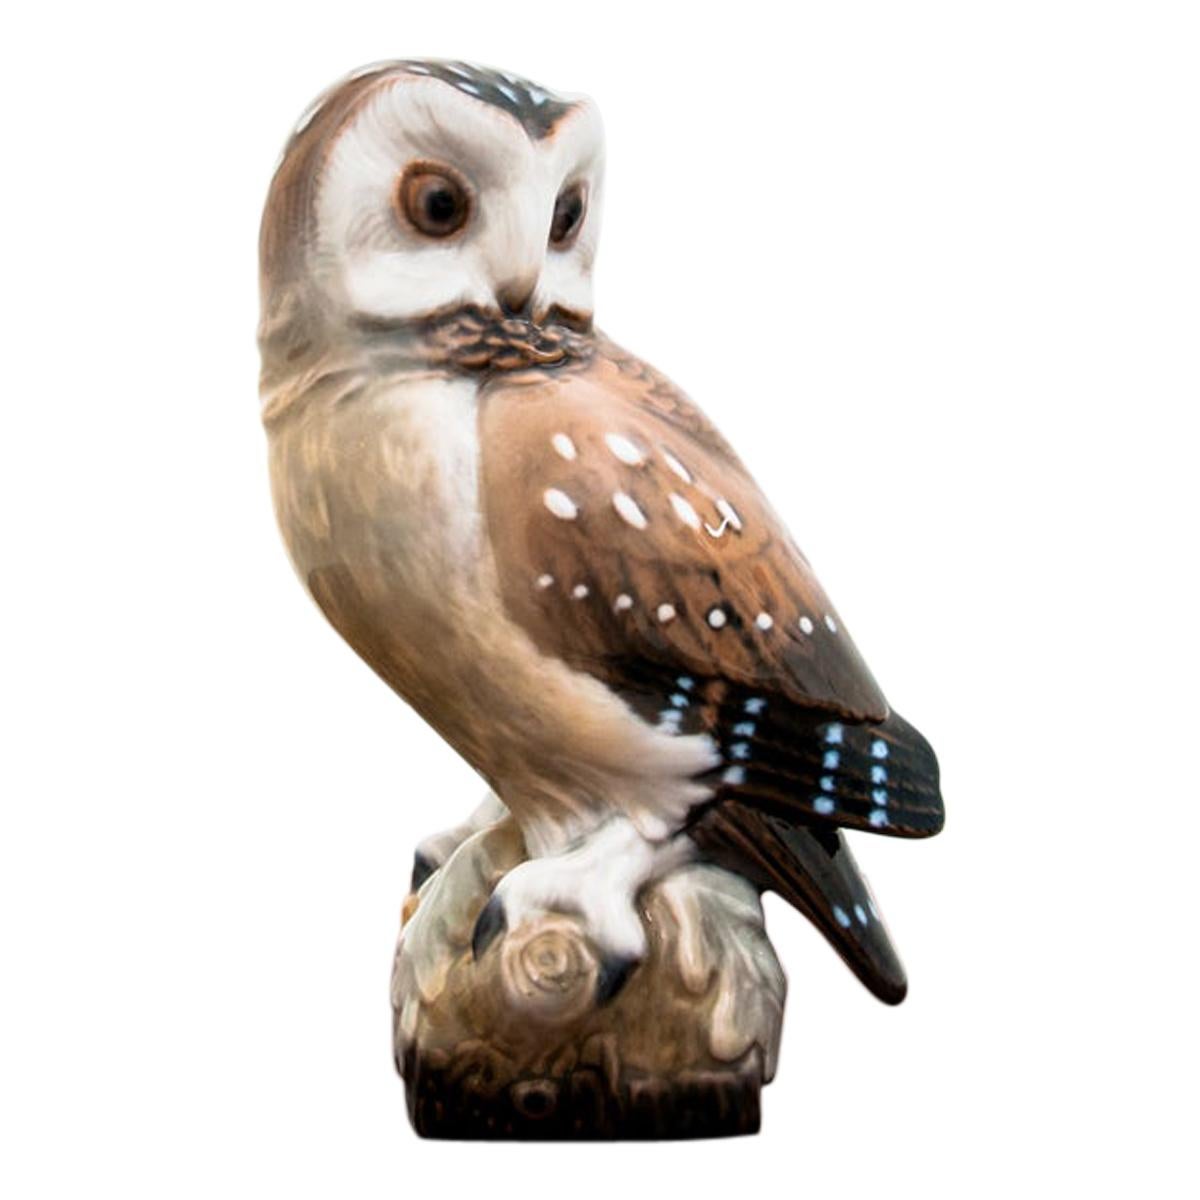 Handpainted Owl Figurine from Royal Crown, 1940